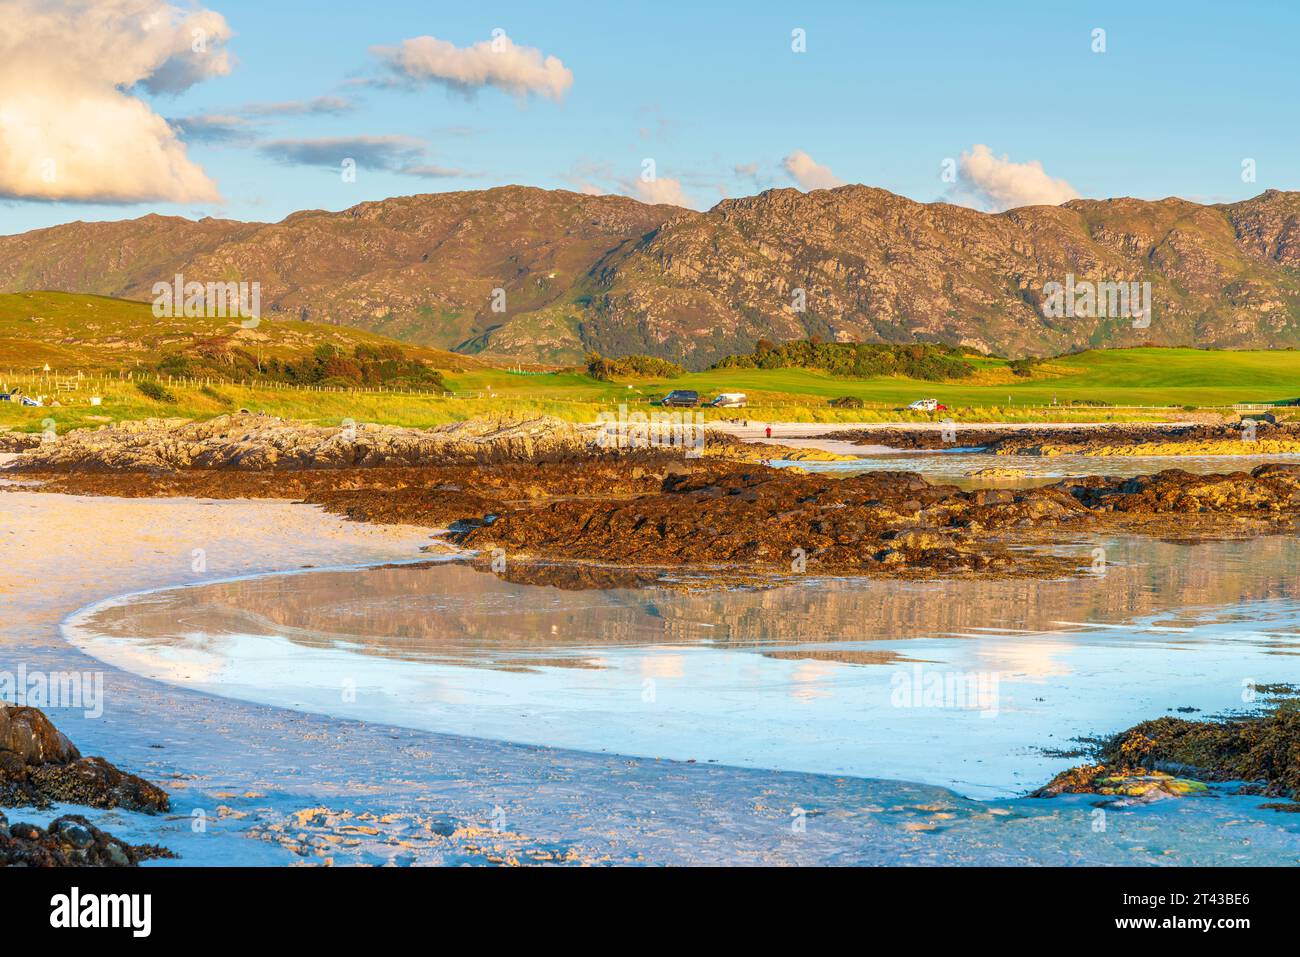 Traigh Beach, Highland, Scotland, United Kingdom, Europe Stock Photo